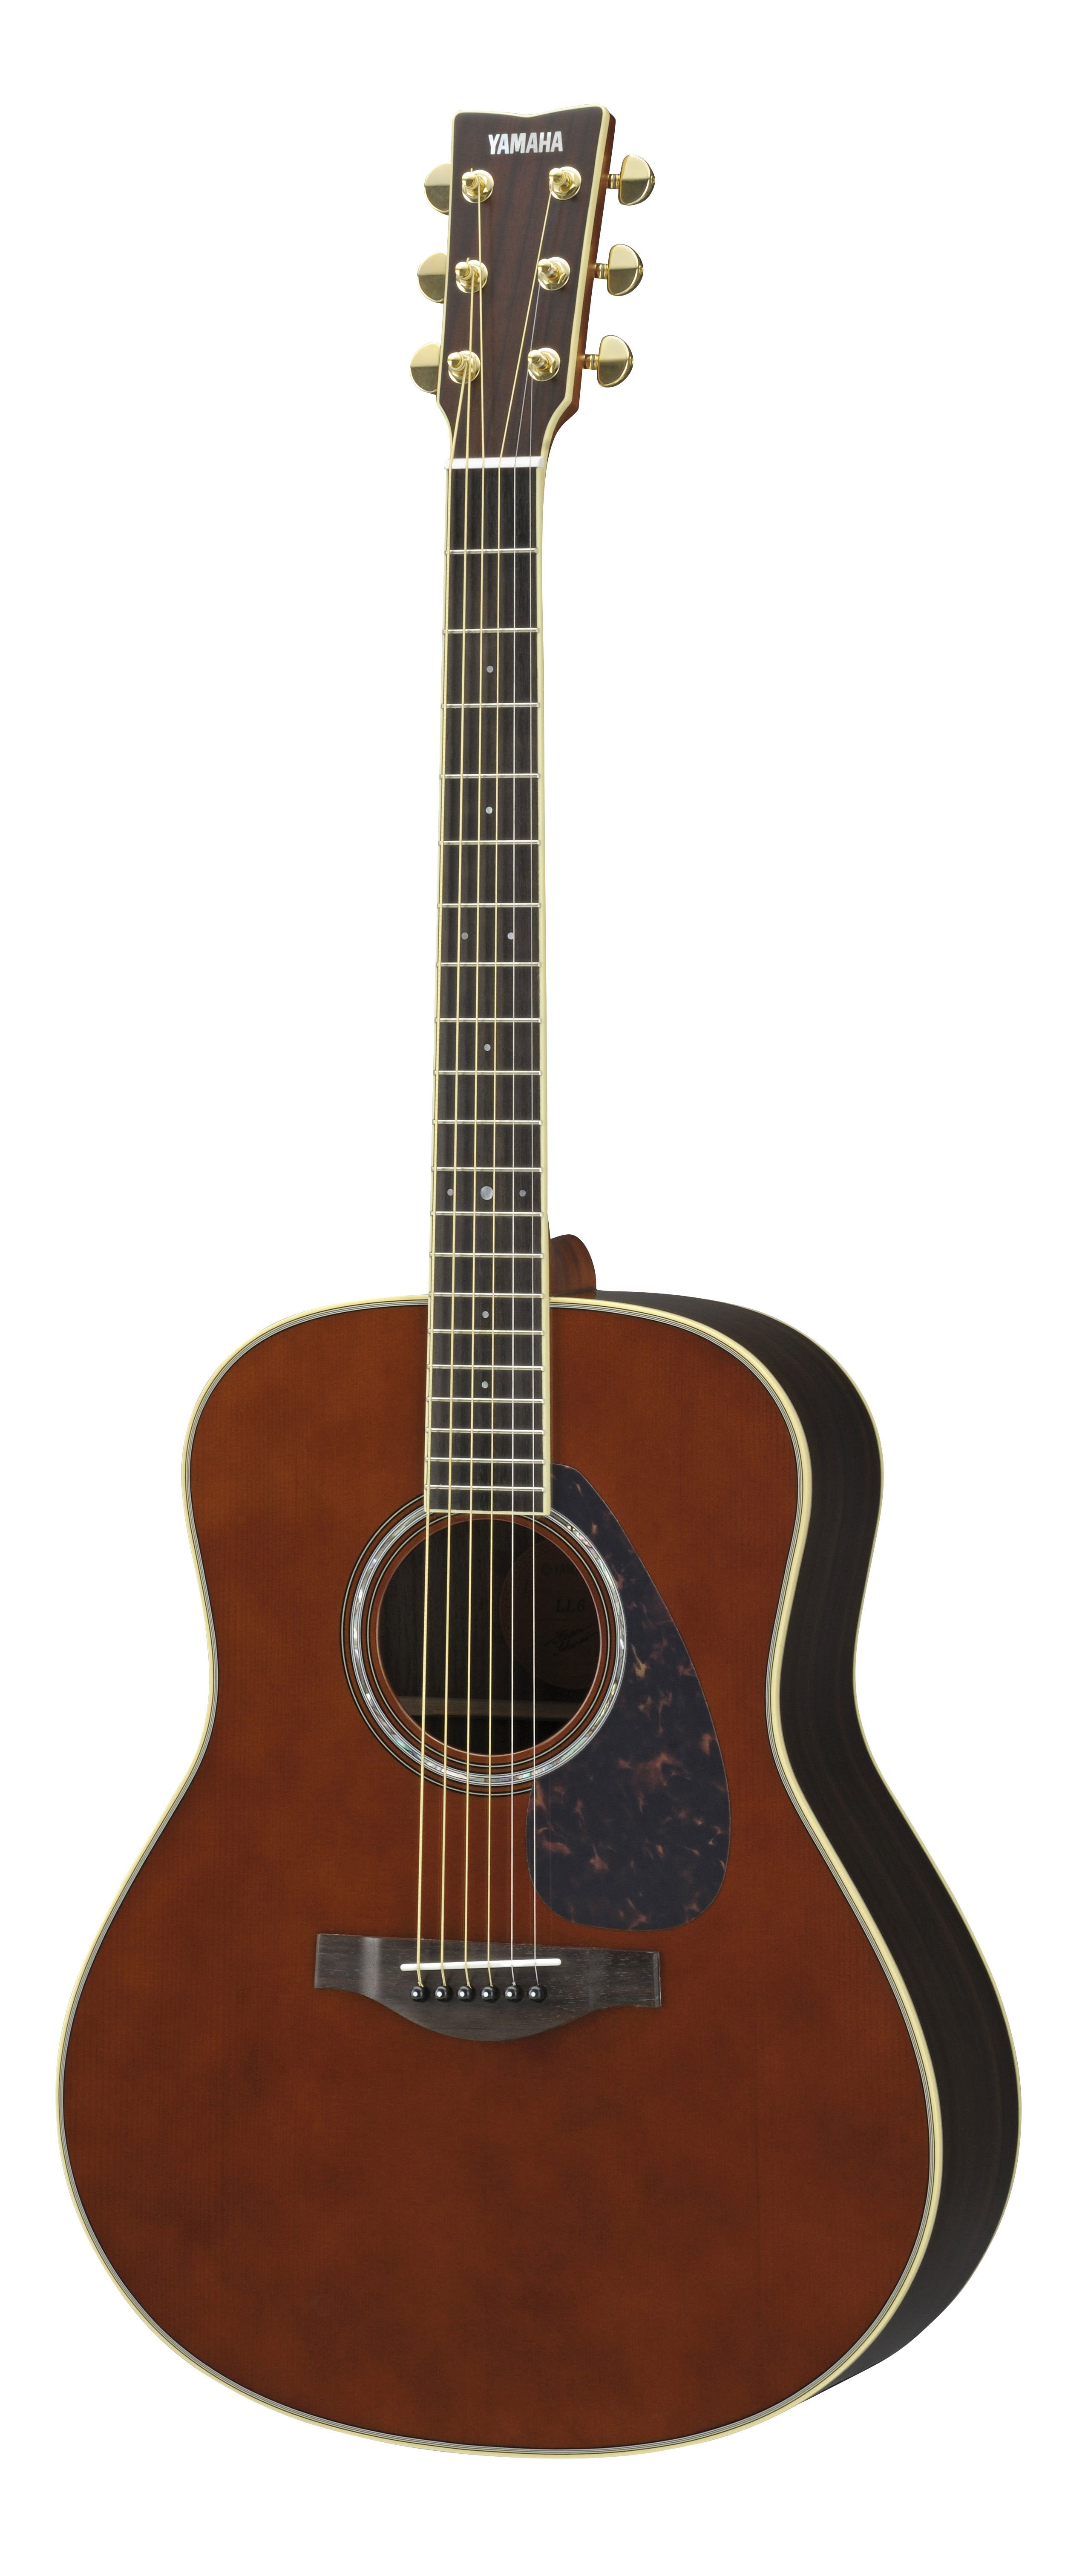 L Series - LL Series - Acoustic Guitars - Guitars, Basses & Amps 